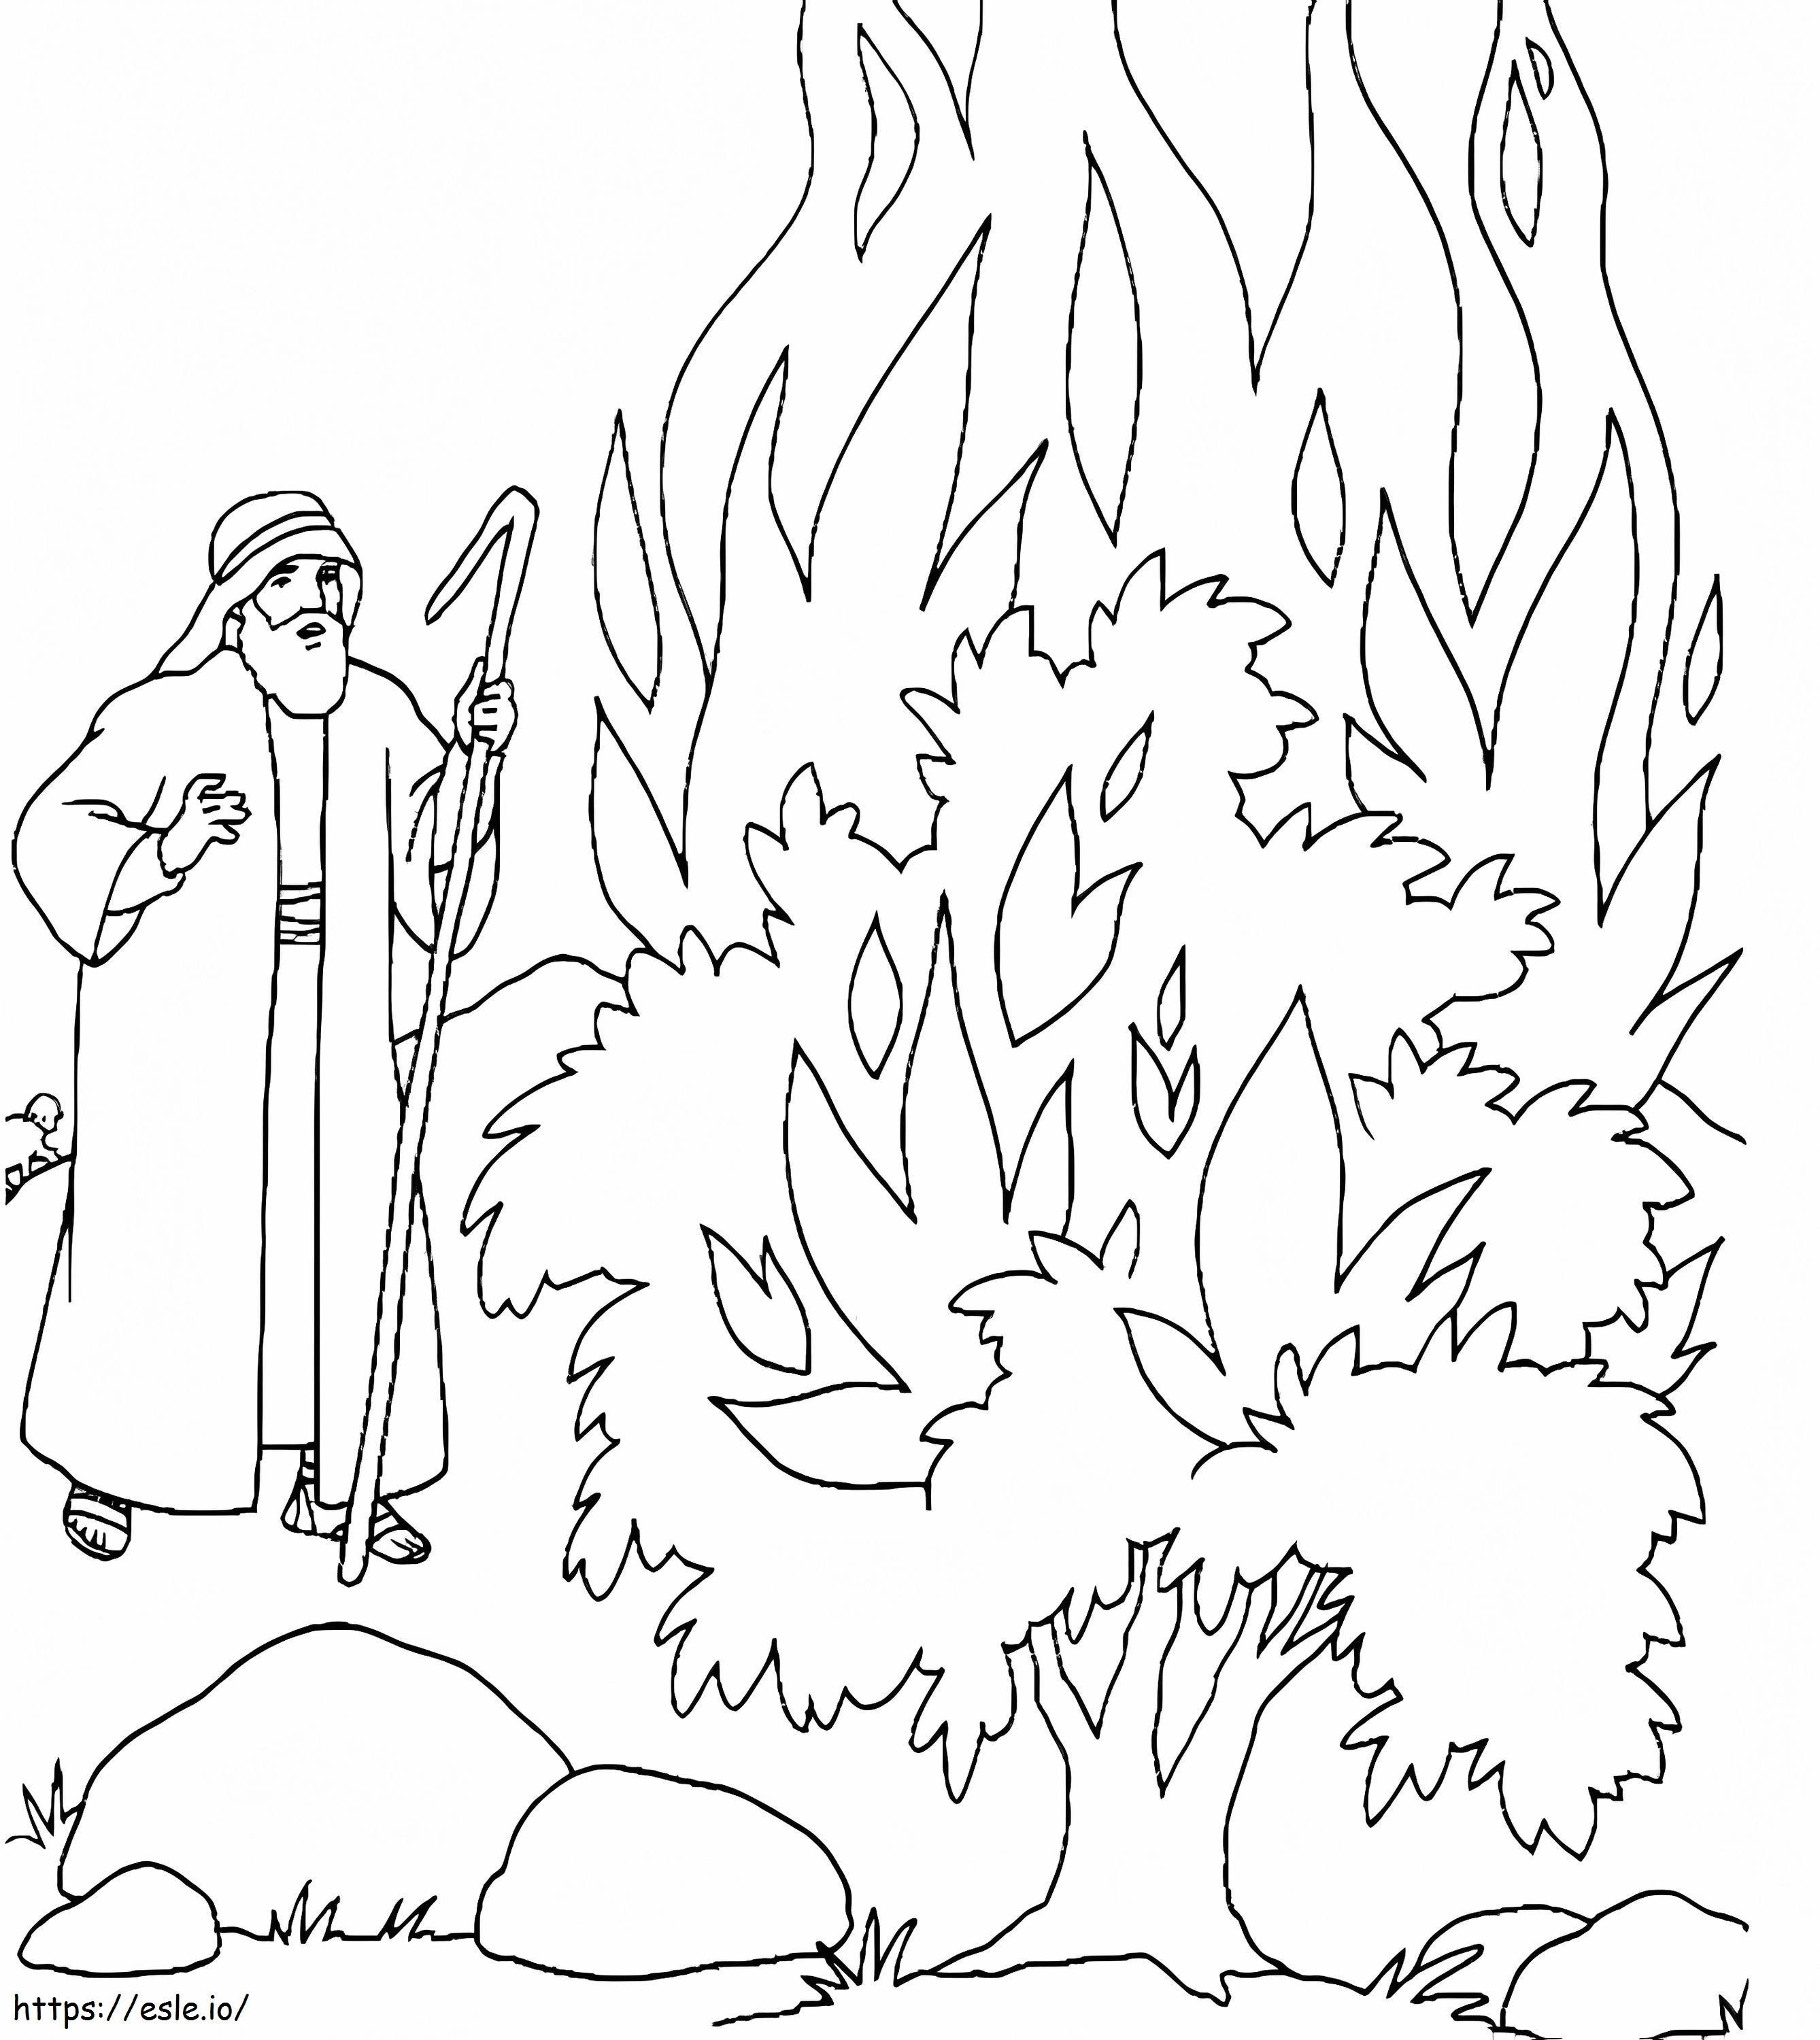 Burning Bush 1 coloring page